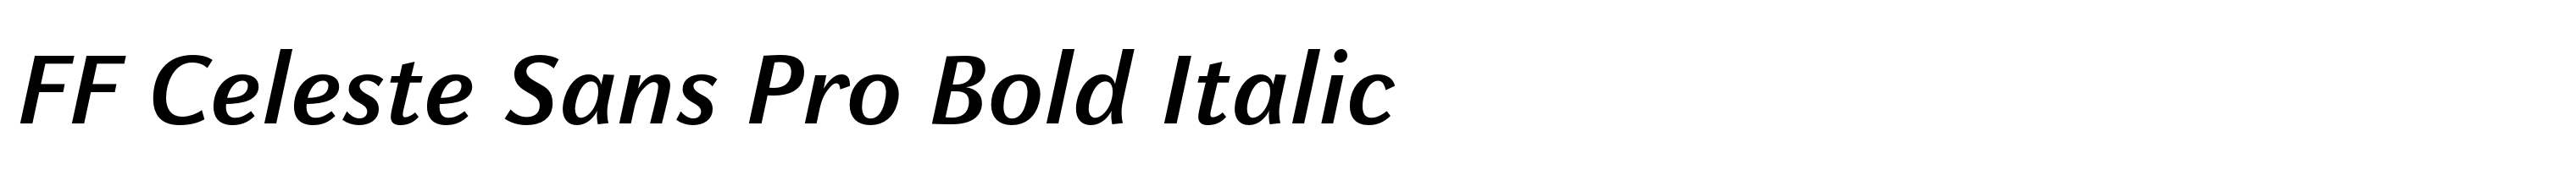 FF Celeste Sans Pro Bold Italic